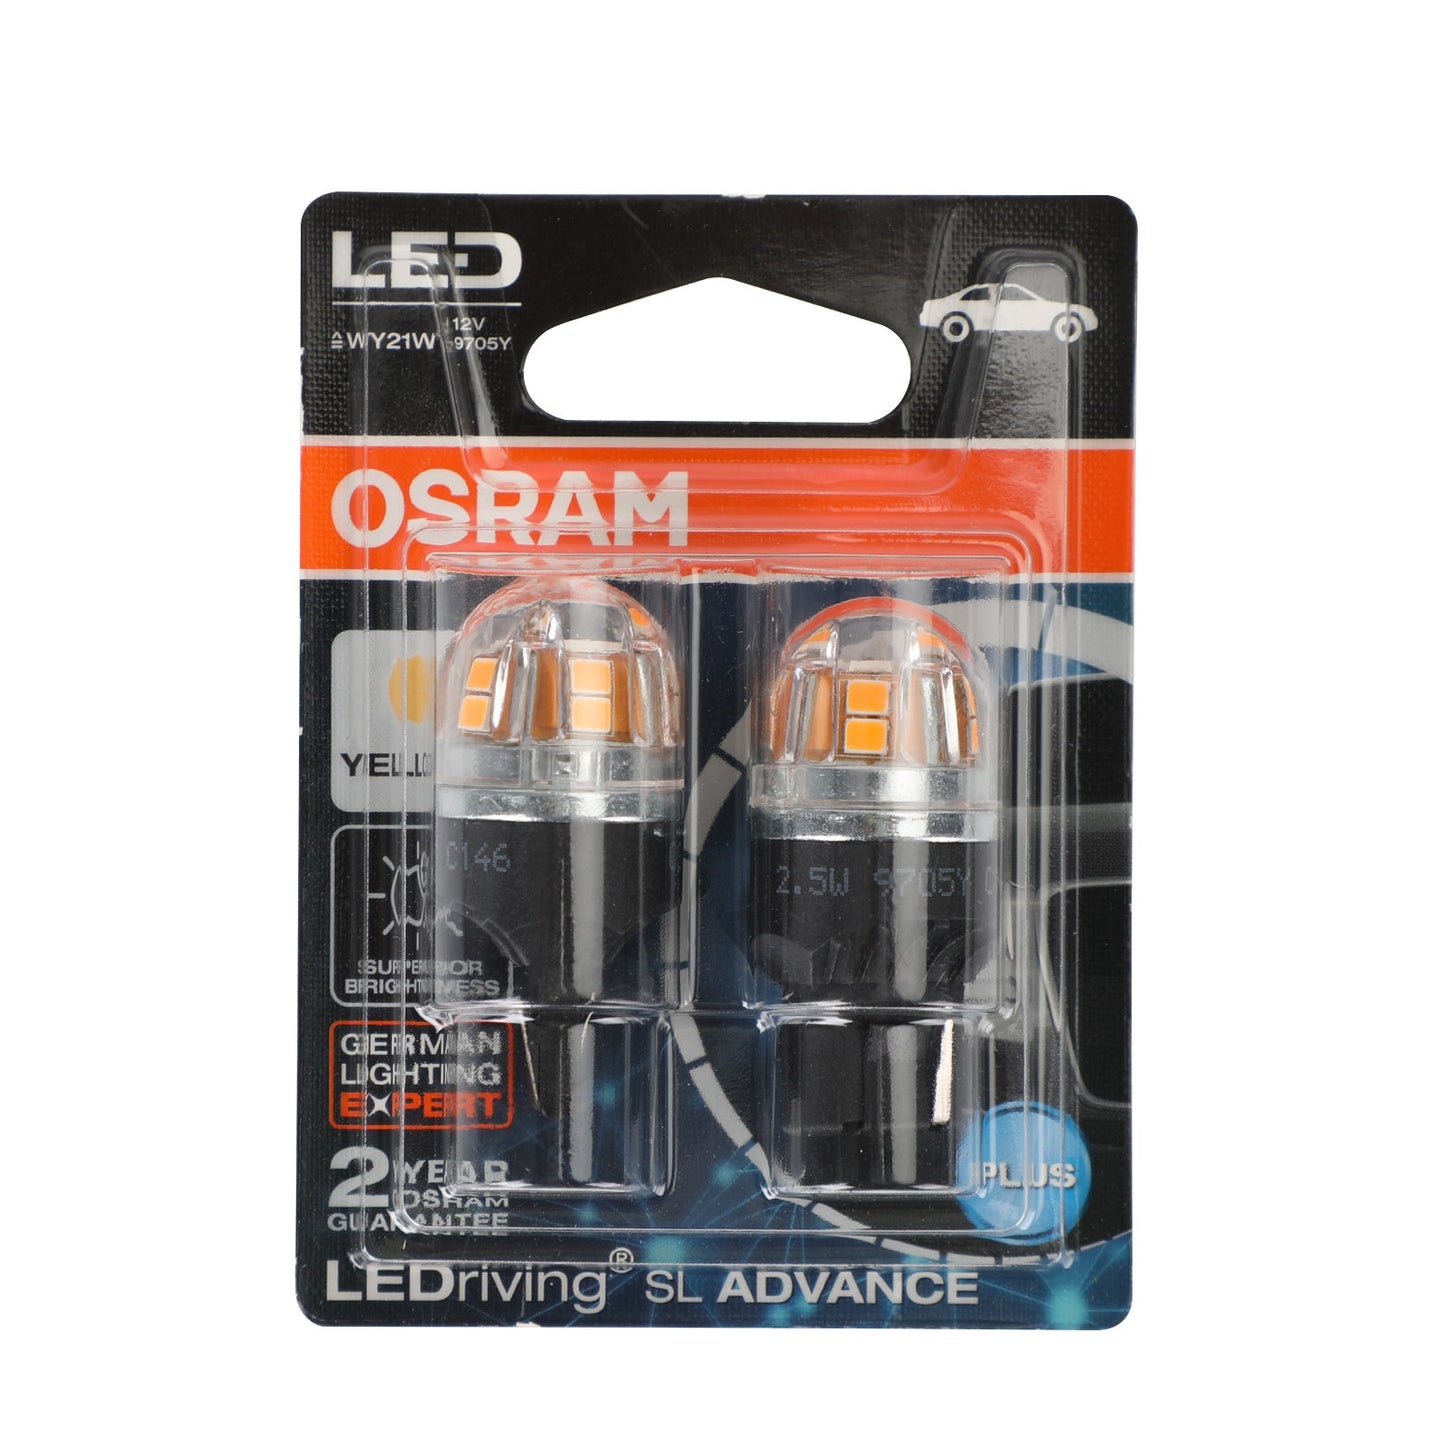 2x For OSRAM 9705Y Car Auxiliary Bulbs LED WY21W 12V2.5W WX3x16d